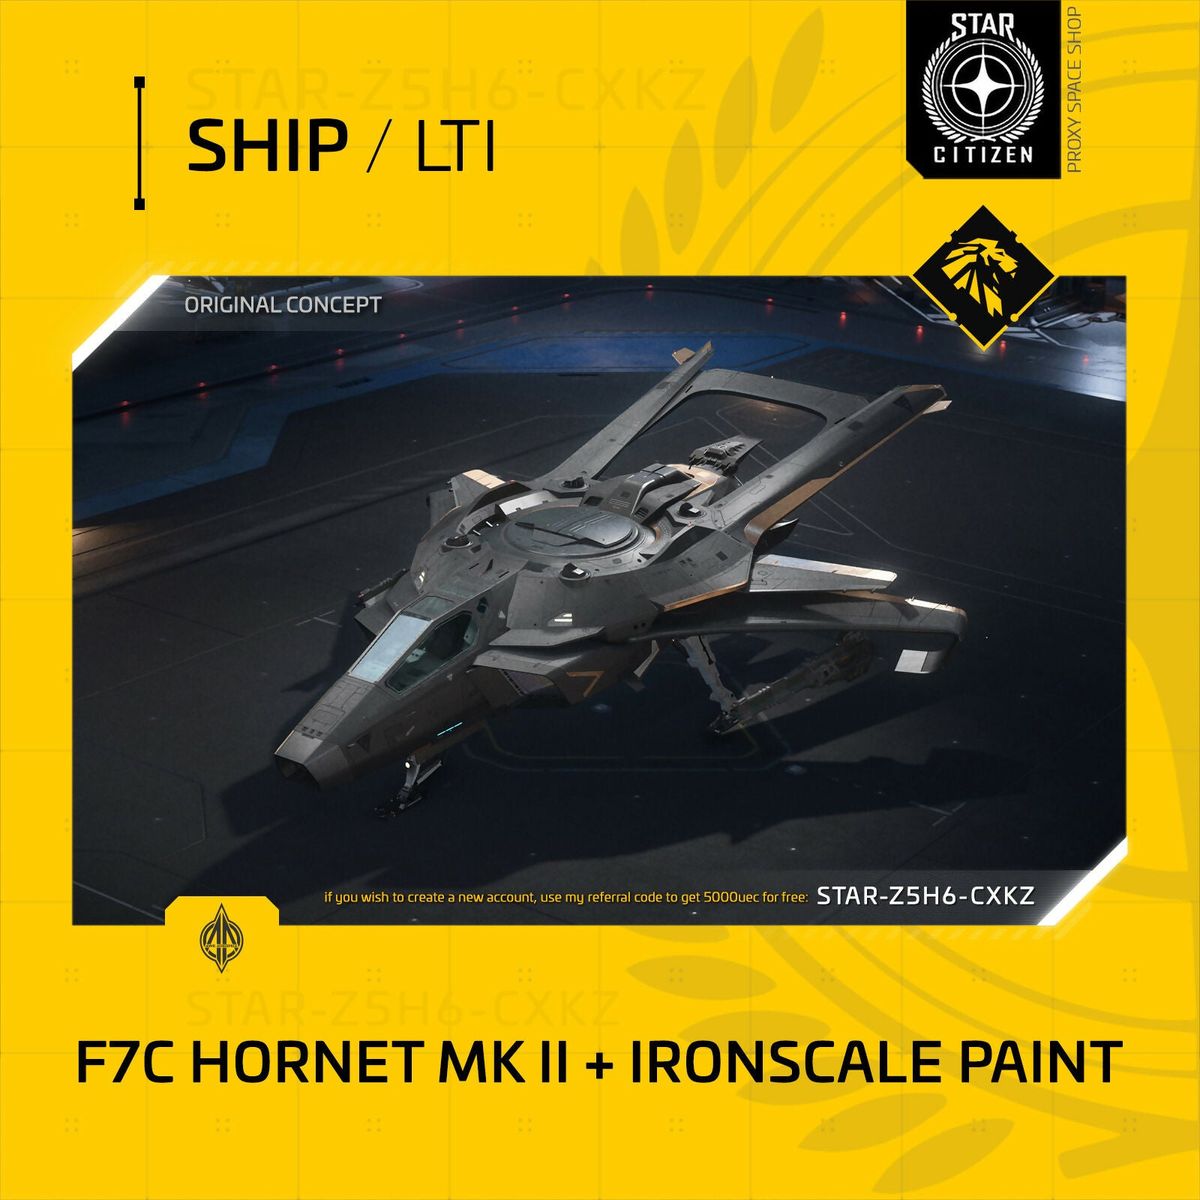 Anvil F7C Hornet Mk II + Ironscale Paint - Lti - Original Concept OC